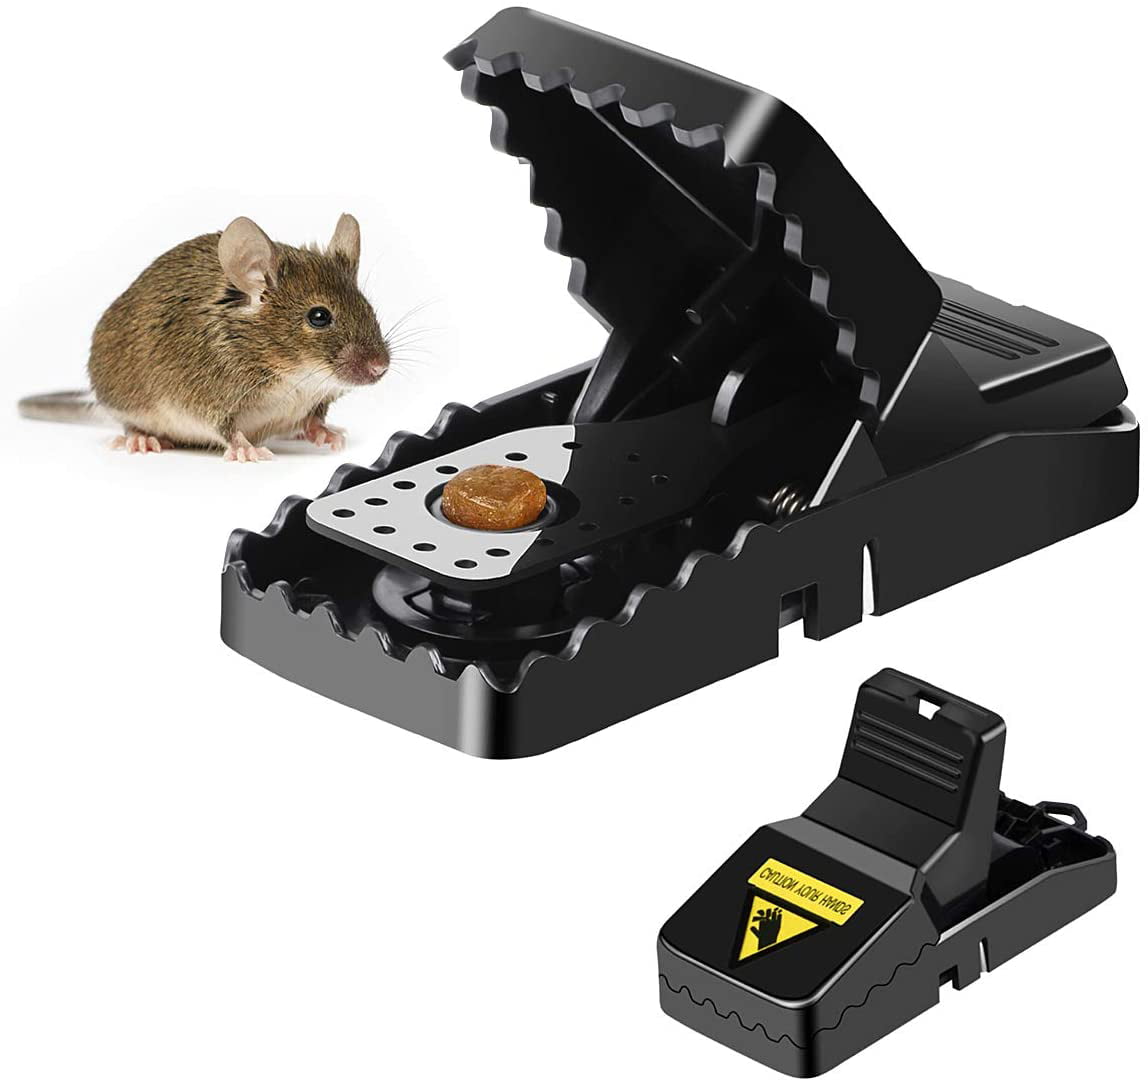 Large Powerful Rat Traps Easy Setup Wash & Reuse – Kills Instantly 6 Pack 